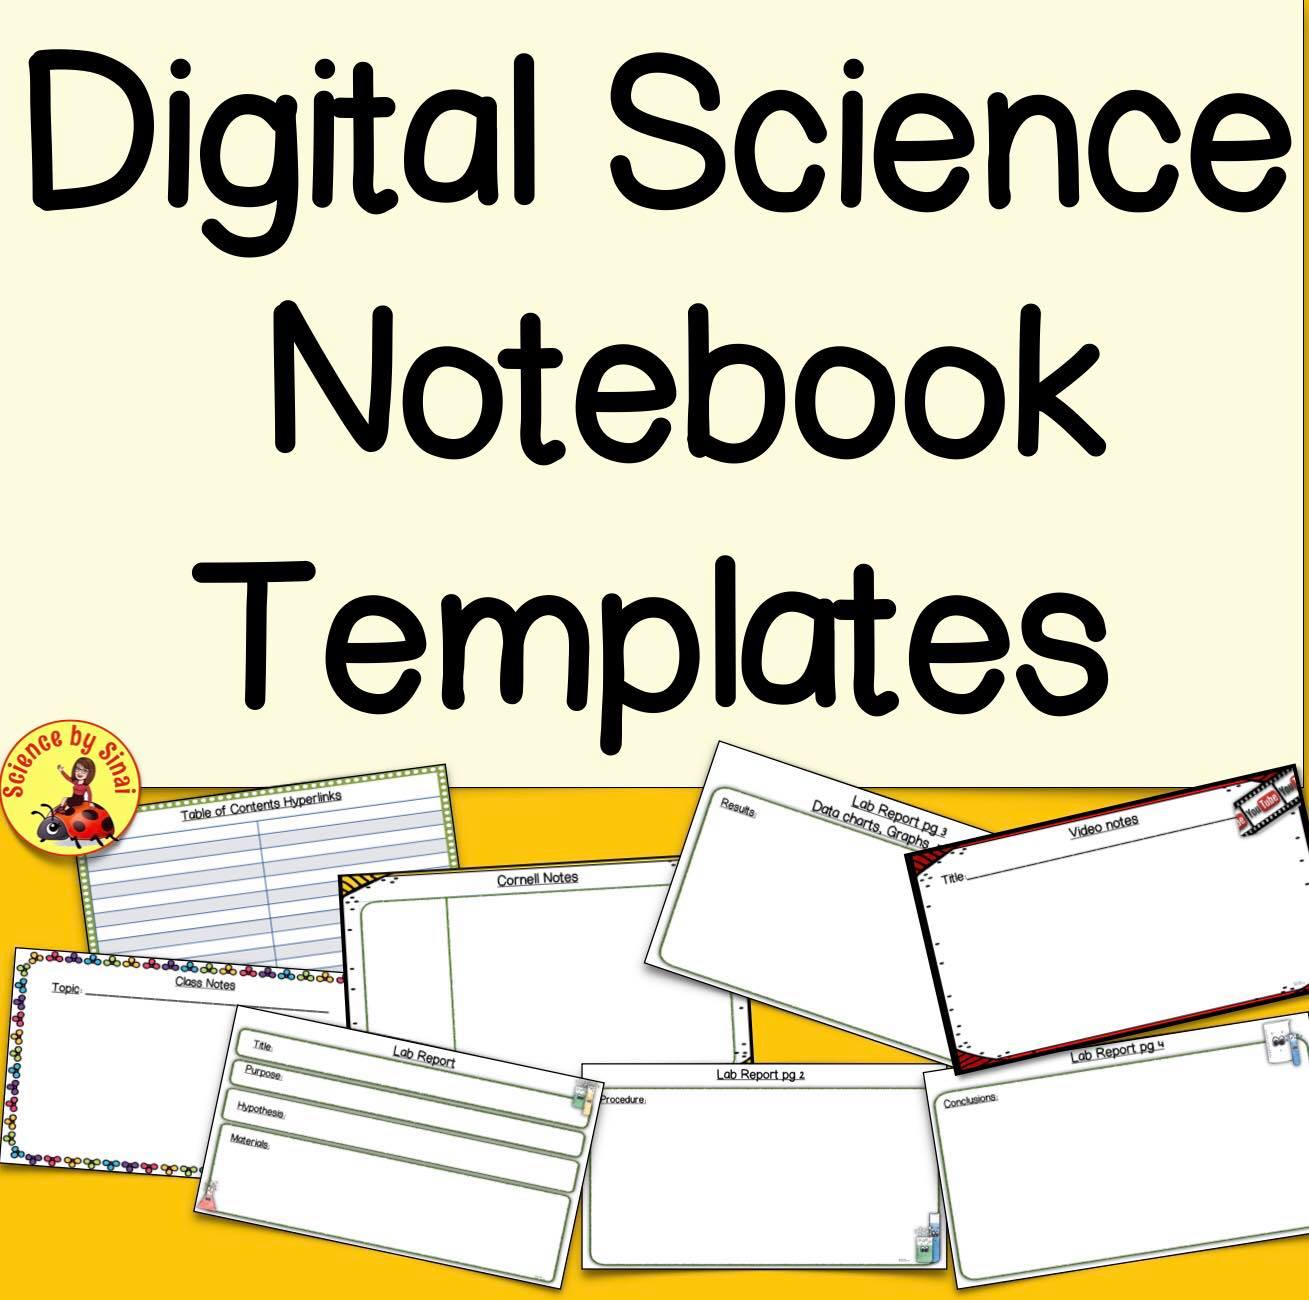 Digital Science Notebook Templates